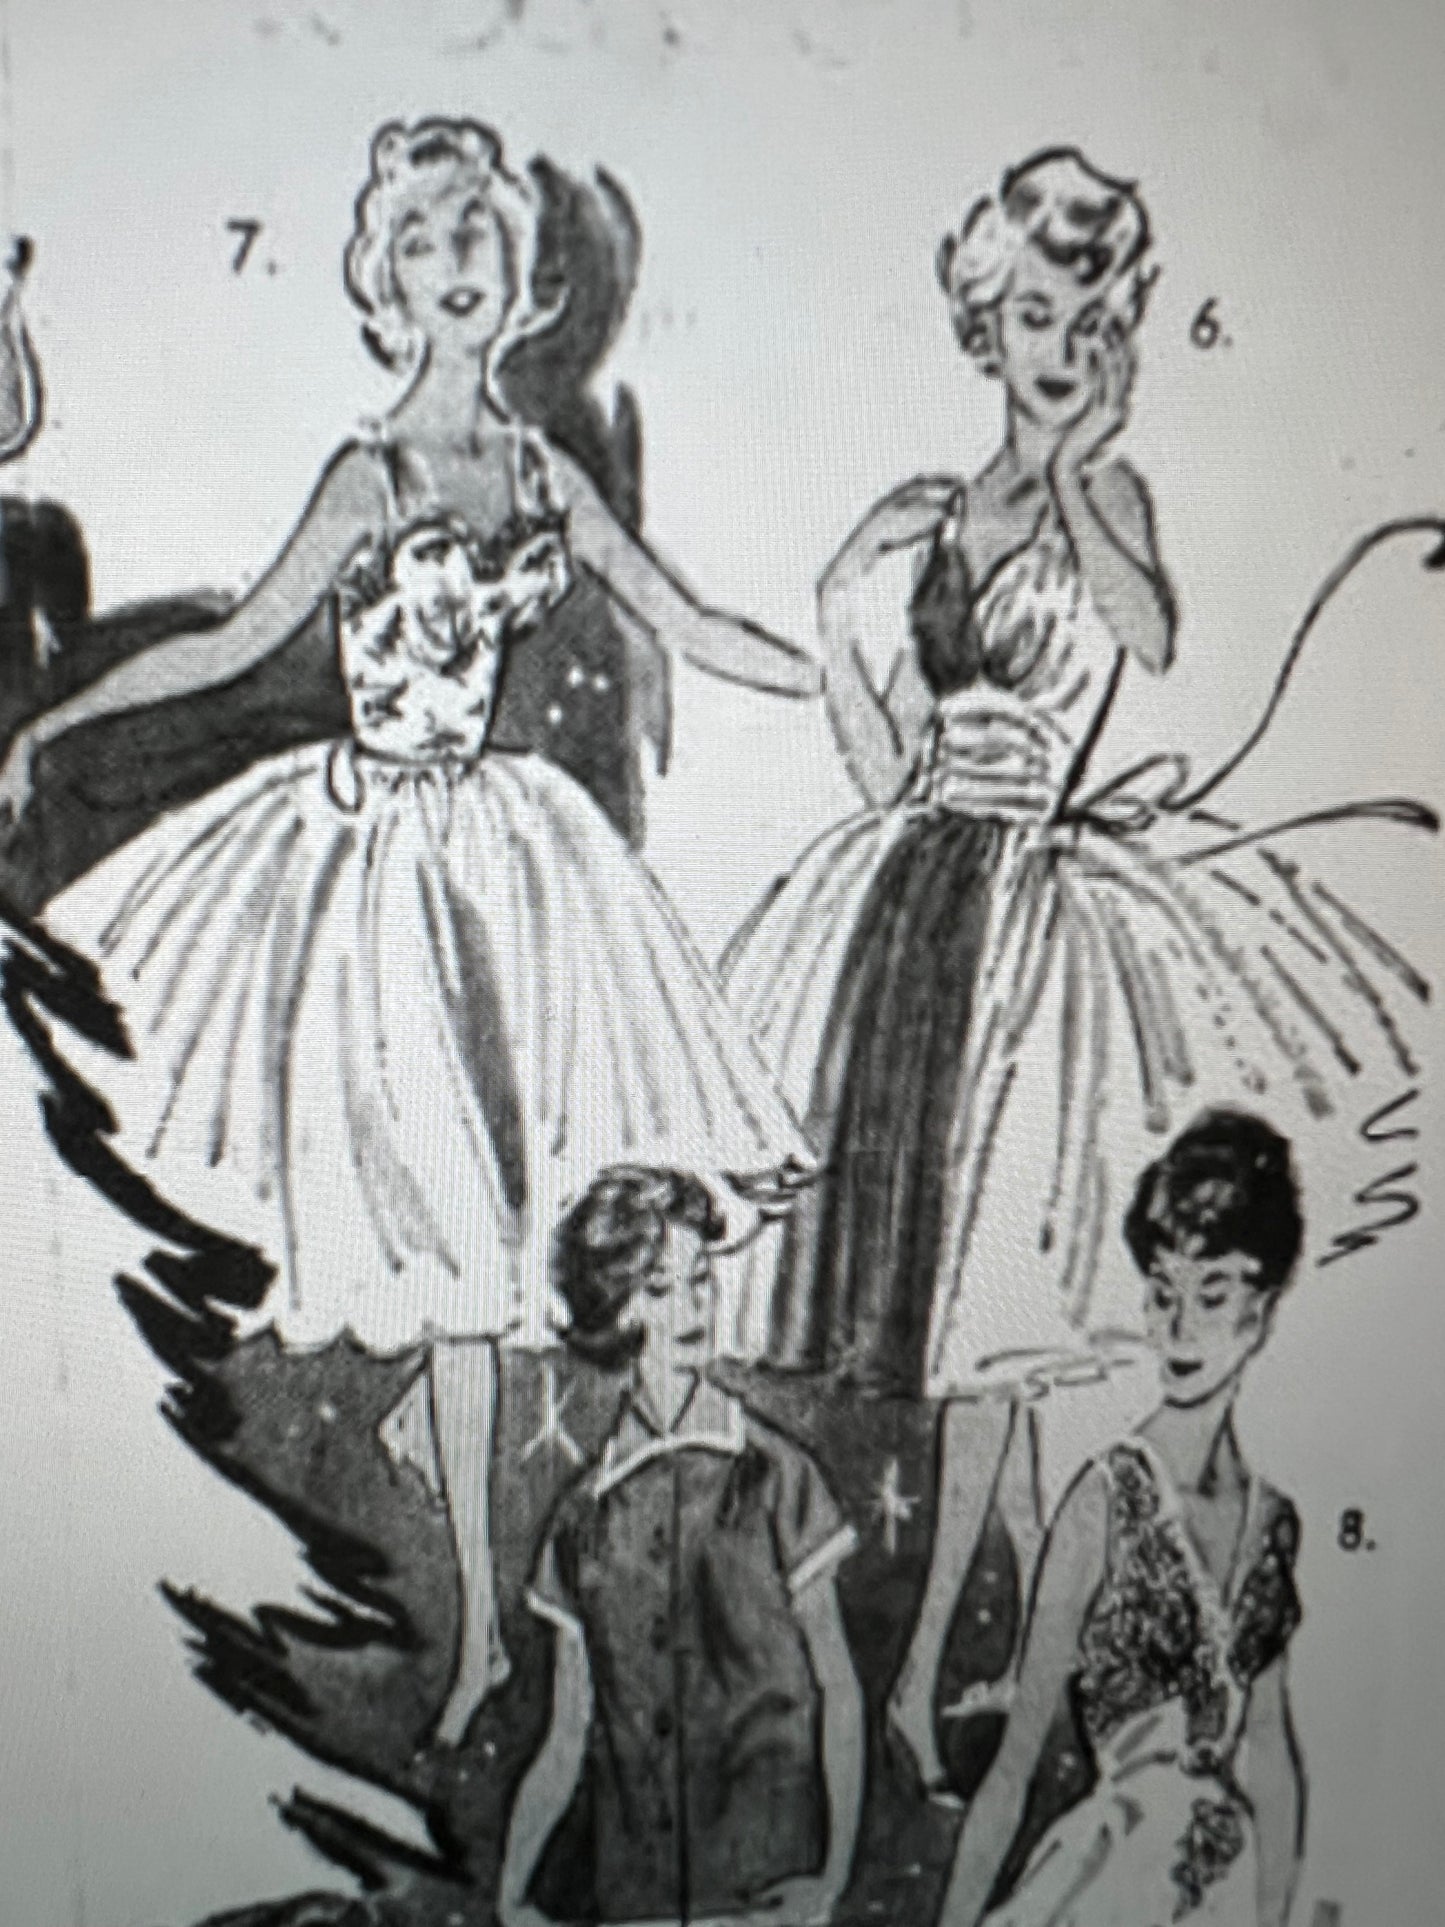 Vintage 1950s Waltz Nightgown - Vanity Fair Pale Blue Double Chiffon Beauty Size